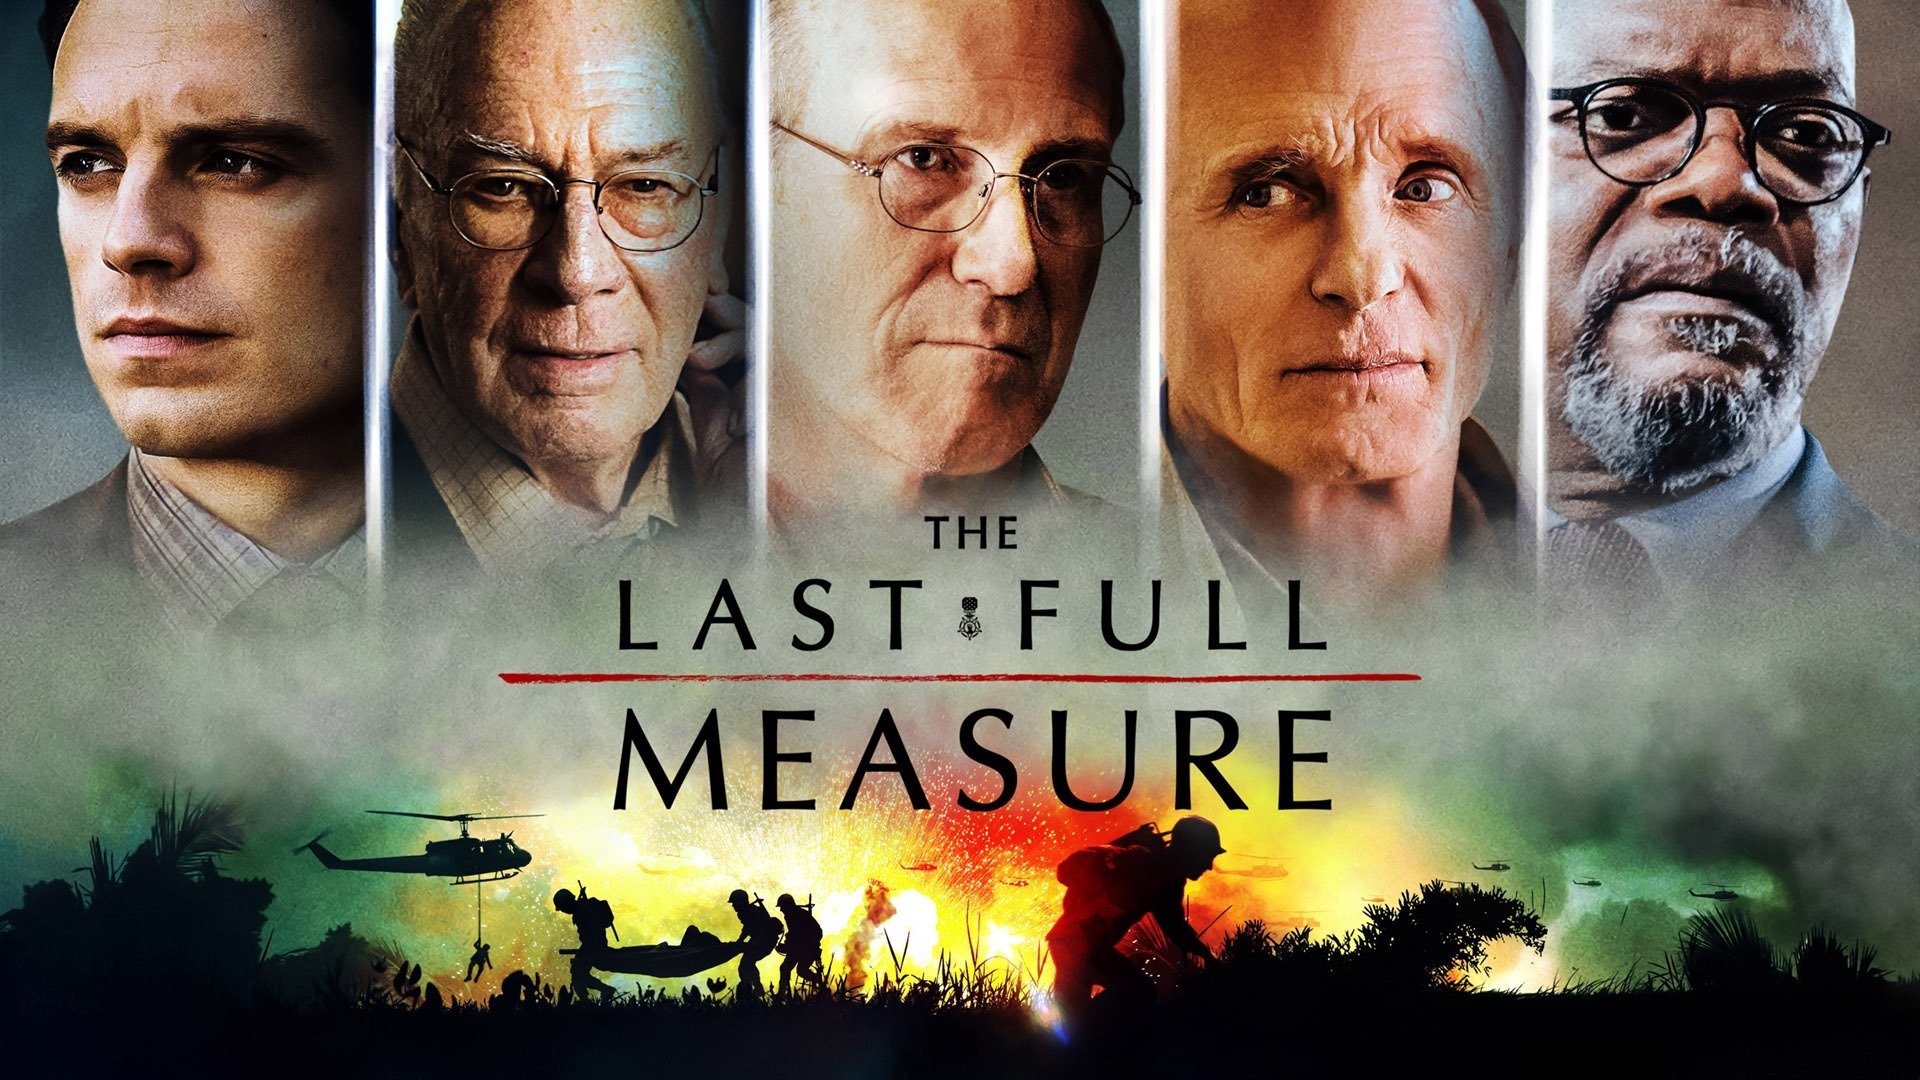 The Last Full Measure, 2020 movie, Full movie, Watch online, 1920x1080 Full HD Desktop